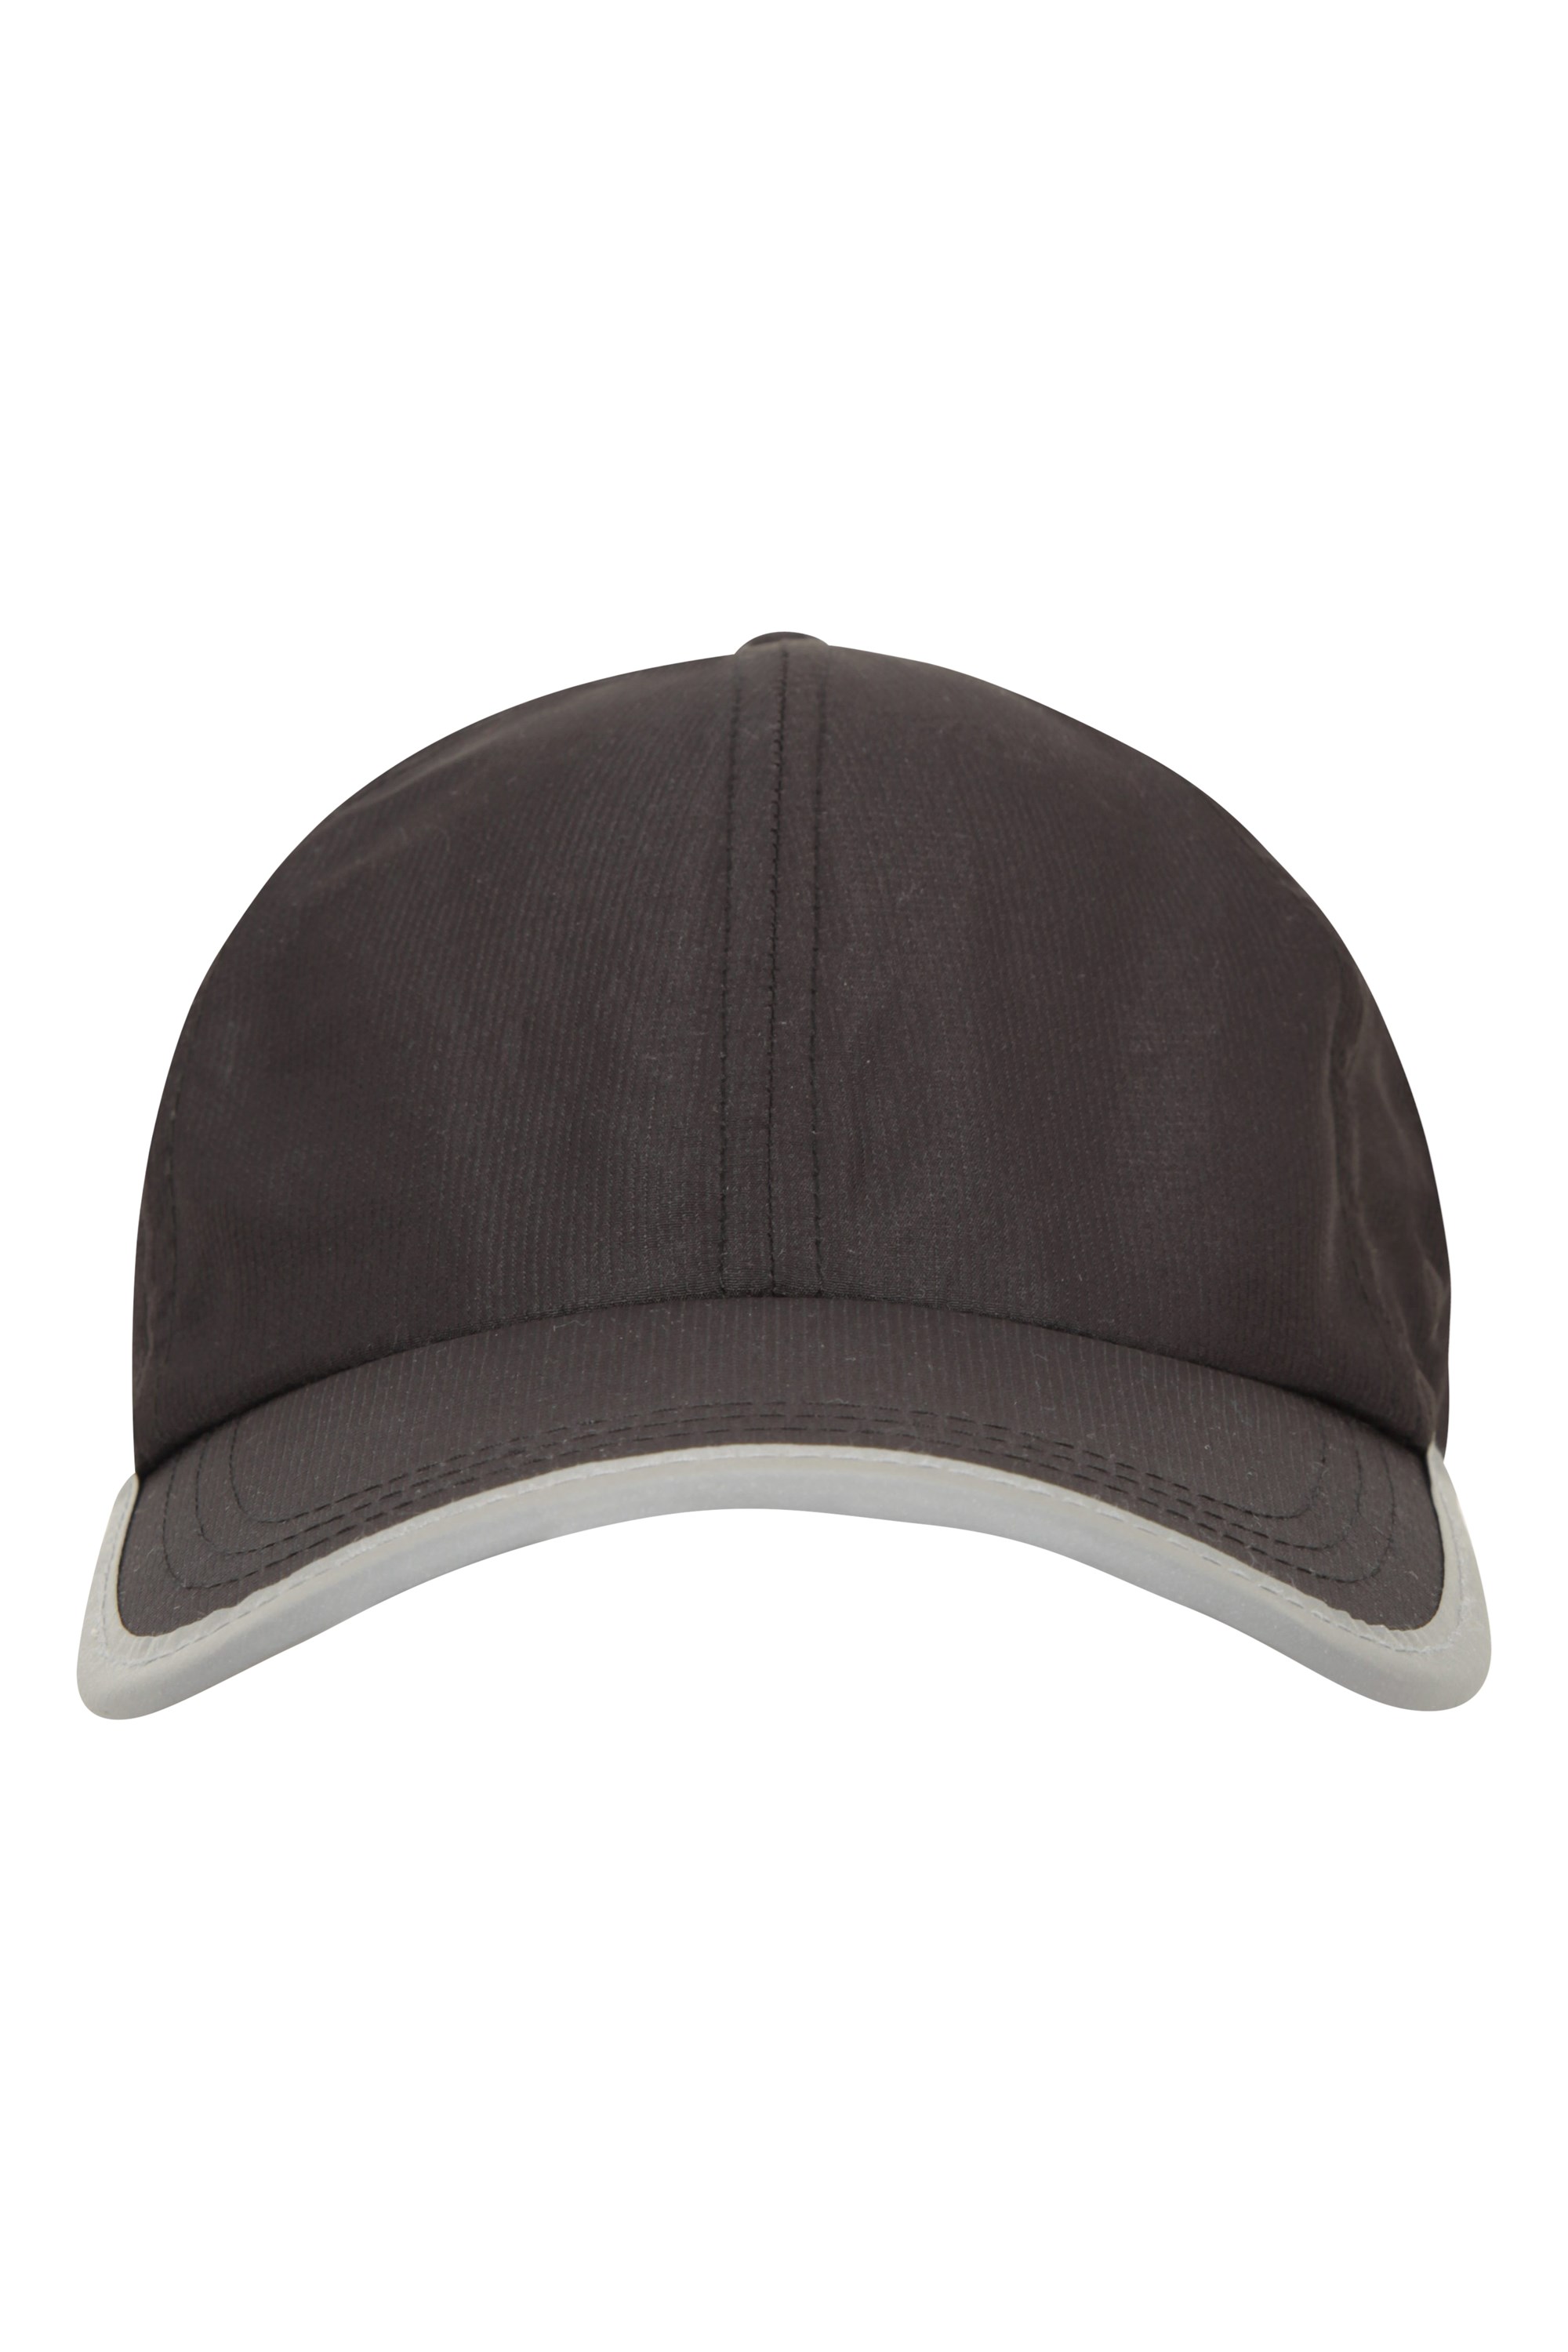 Men's UV Protection Running Hat - White w/ Reflective